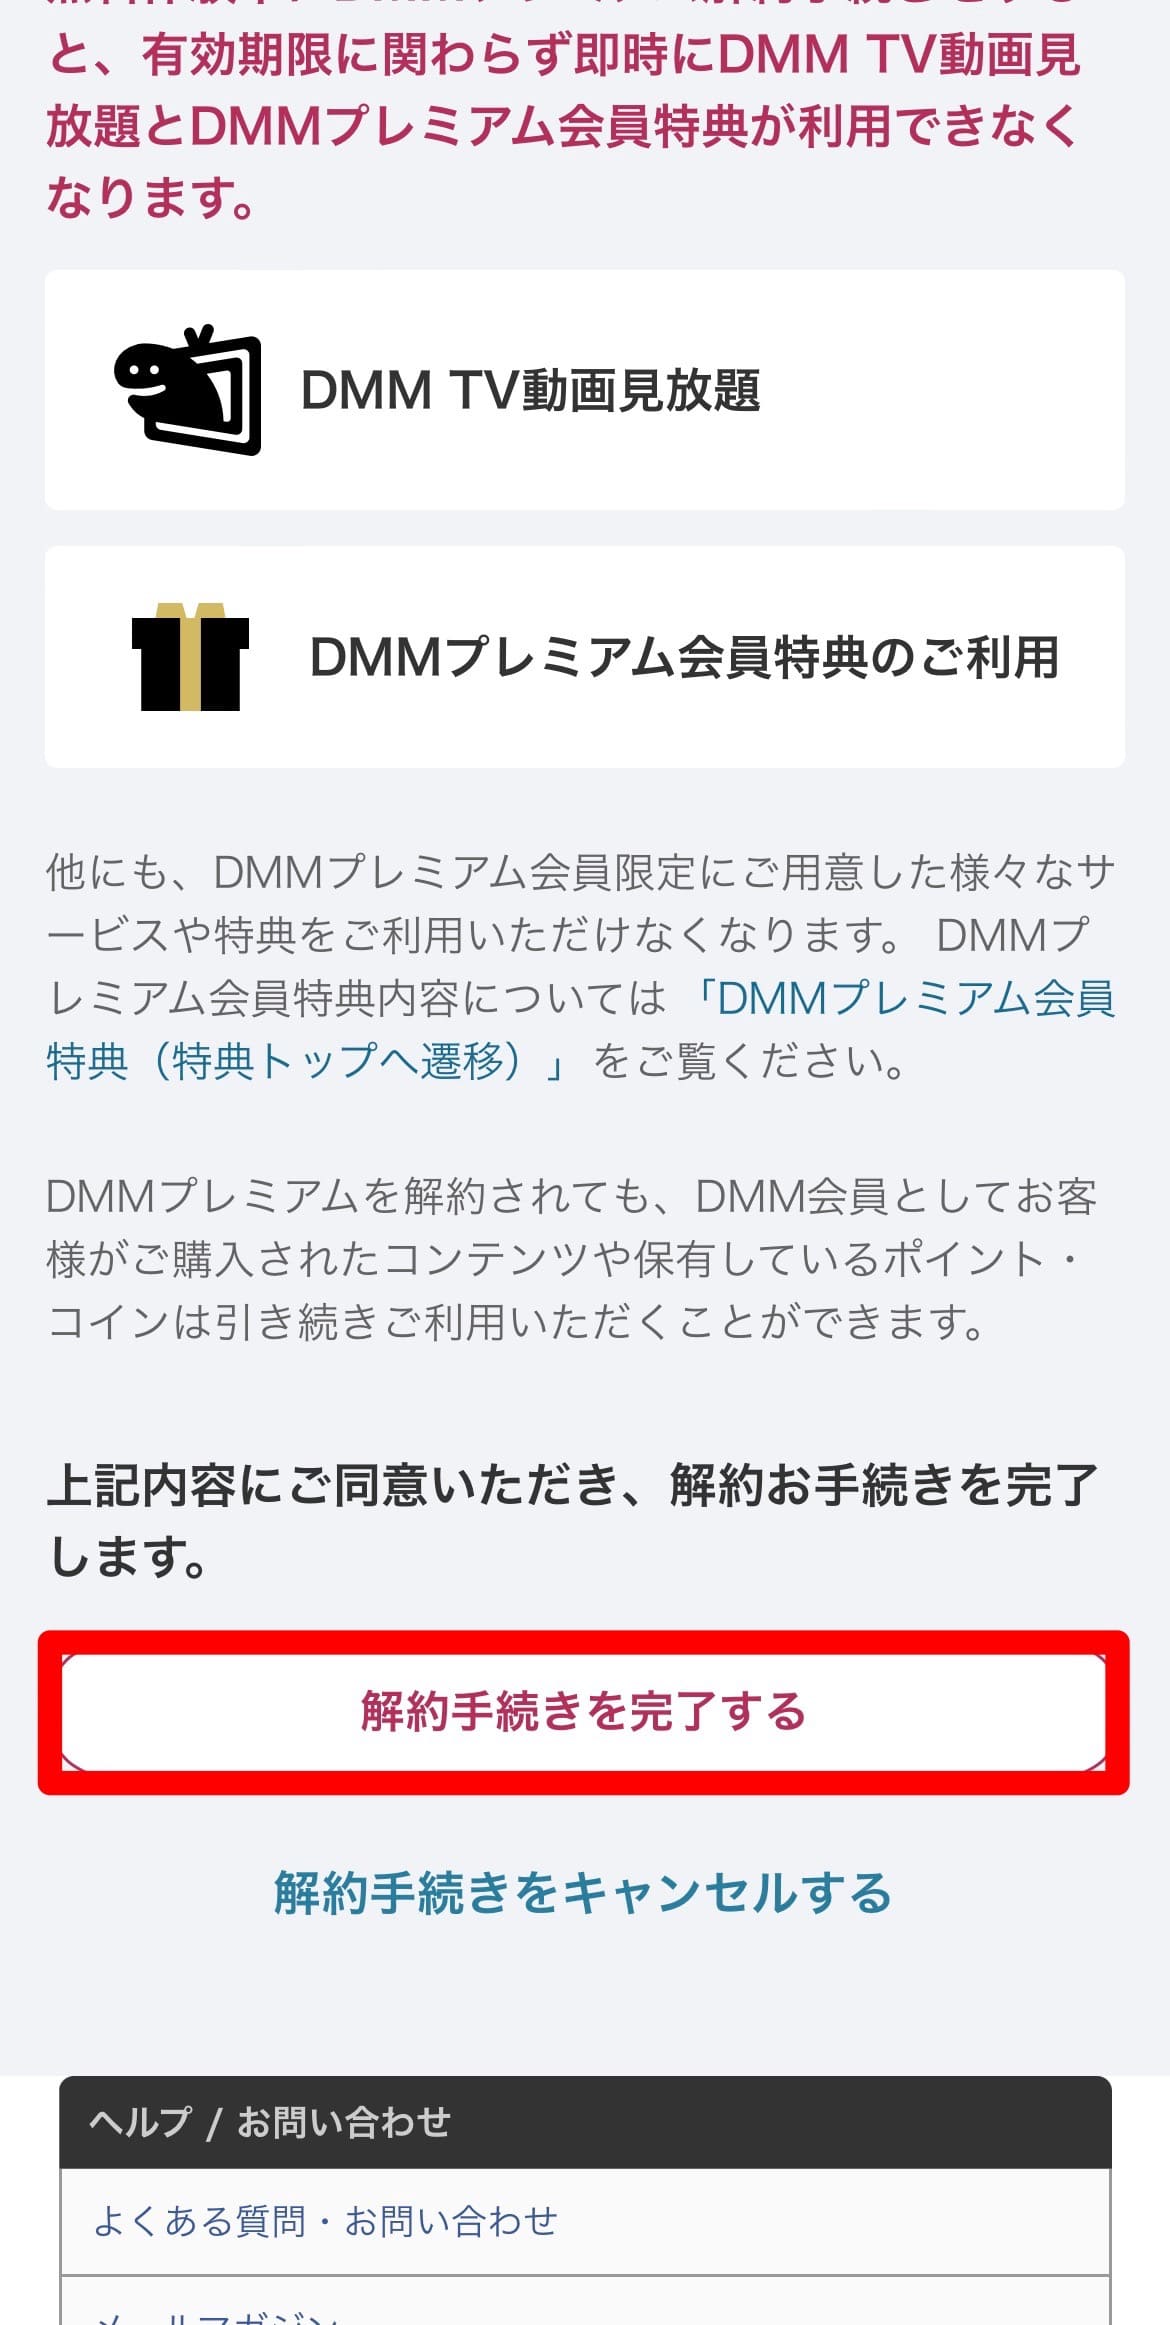 DMMTV解約手順